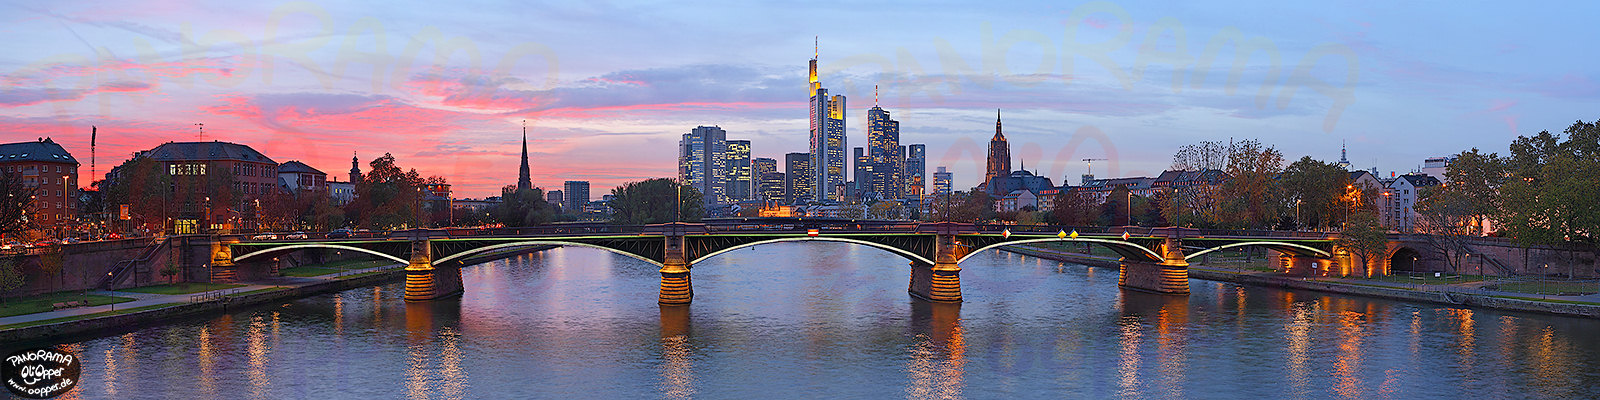 Frankfurt Skyline zum Sonnenuntergang - p142 - (c) by Oliver Opper